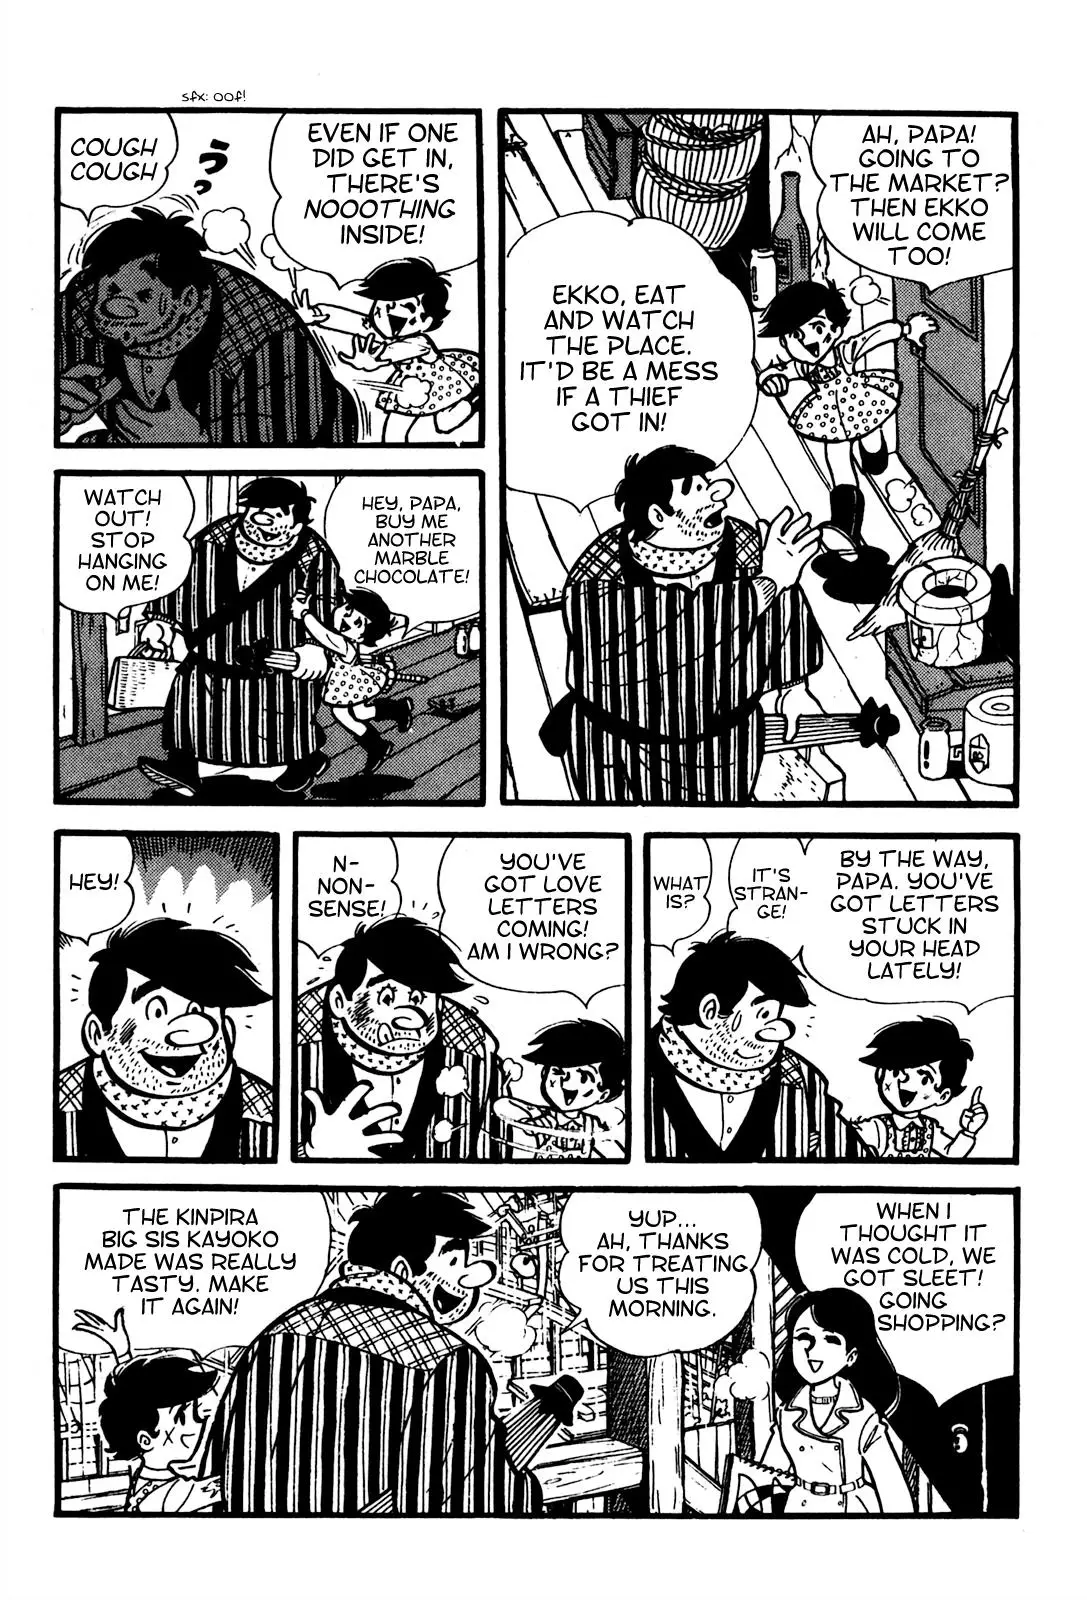 Tetsuya Chiba Short Stories - Shojo Manga - 2 page 4-5cc5a9c4